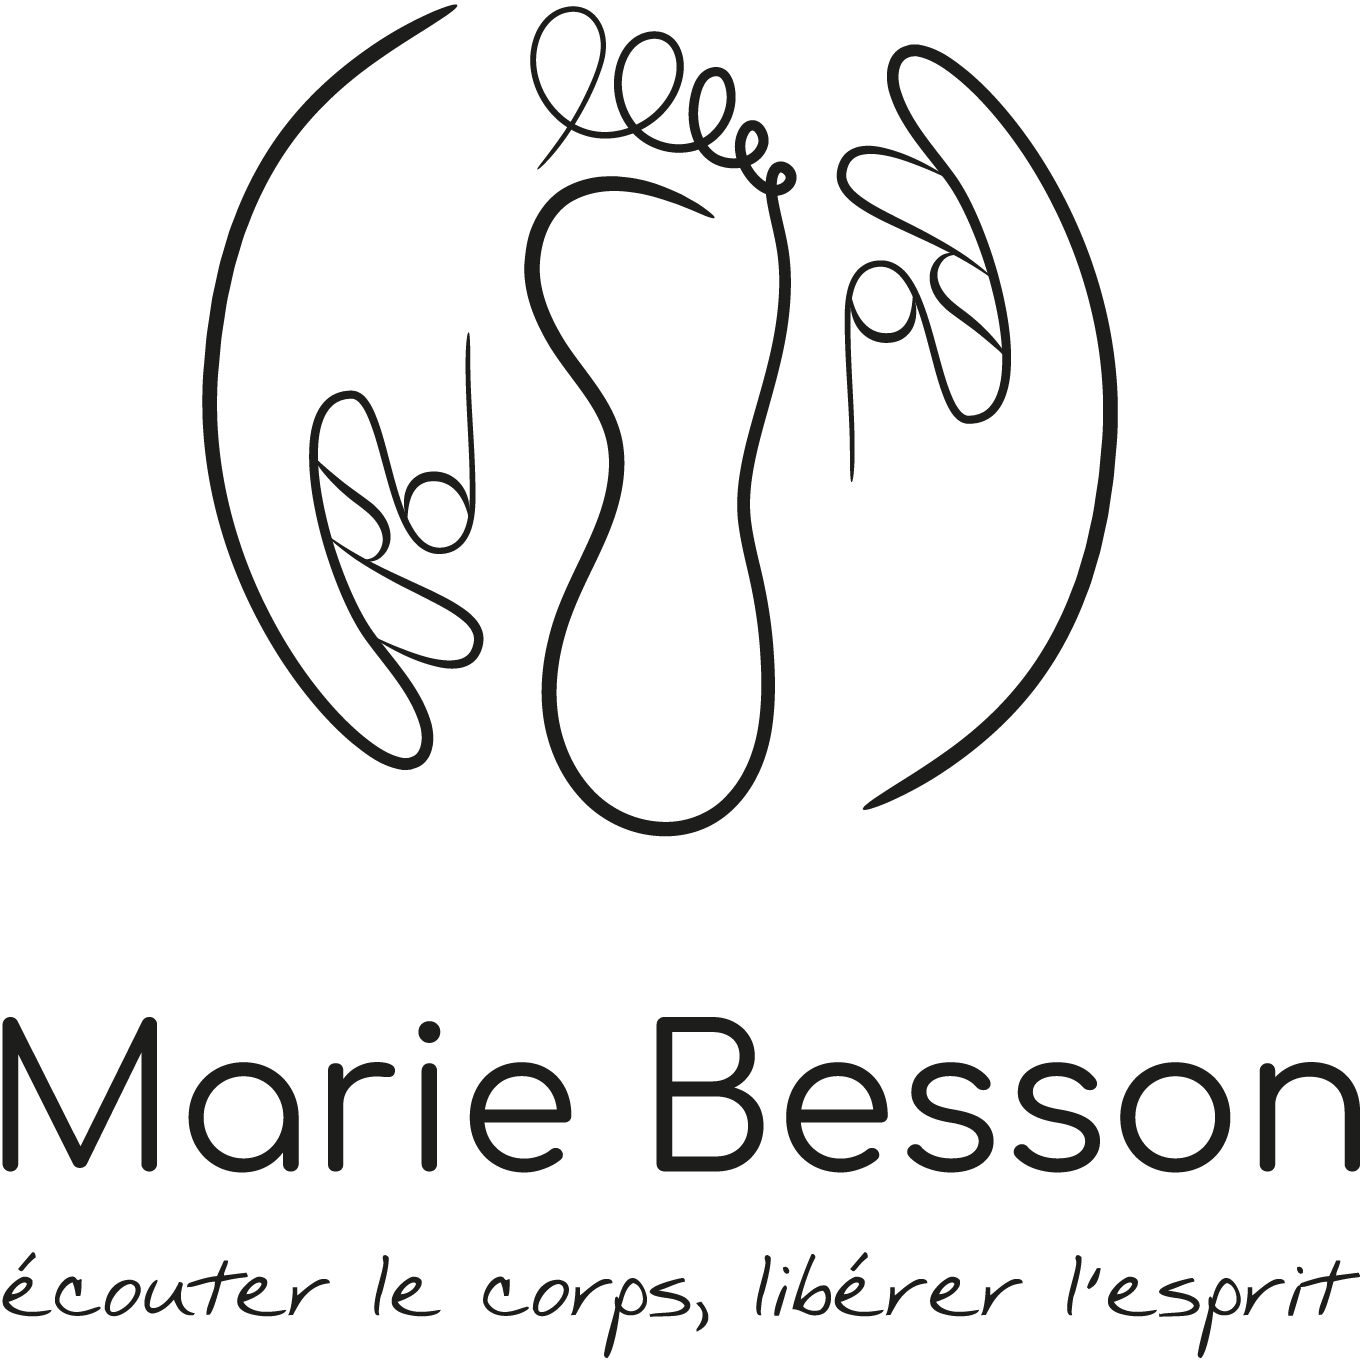 Marie Besson